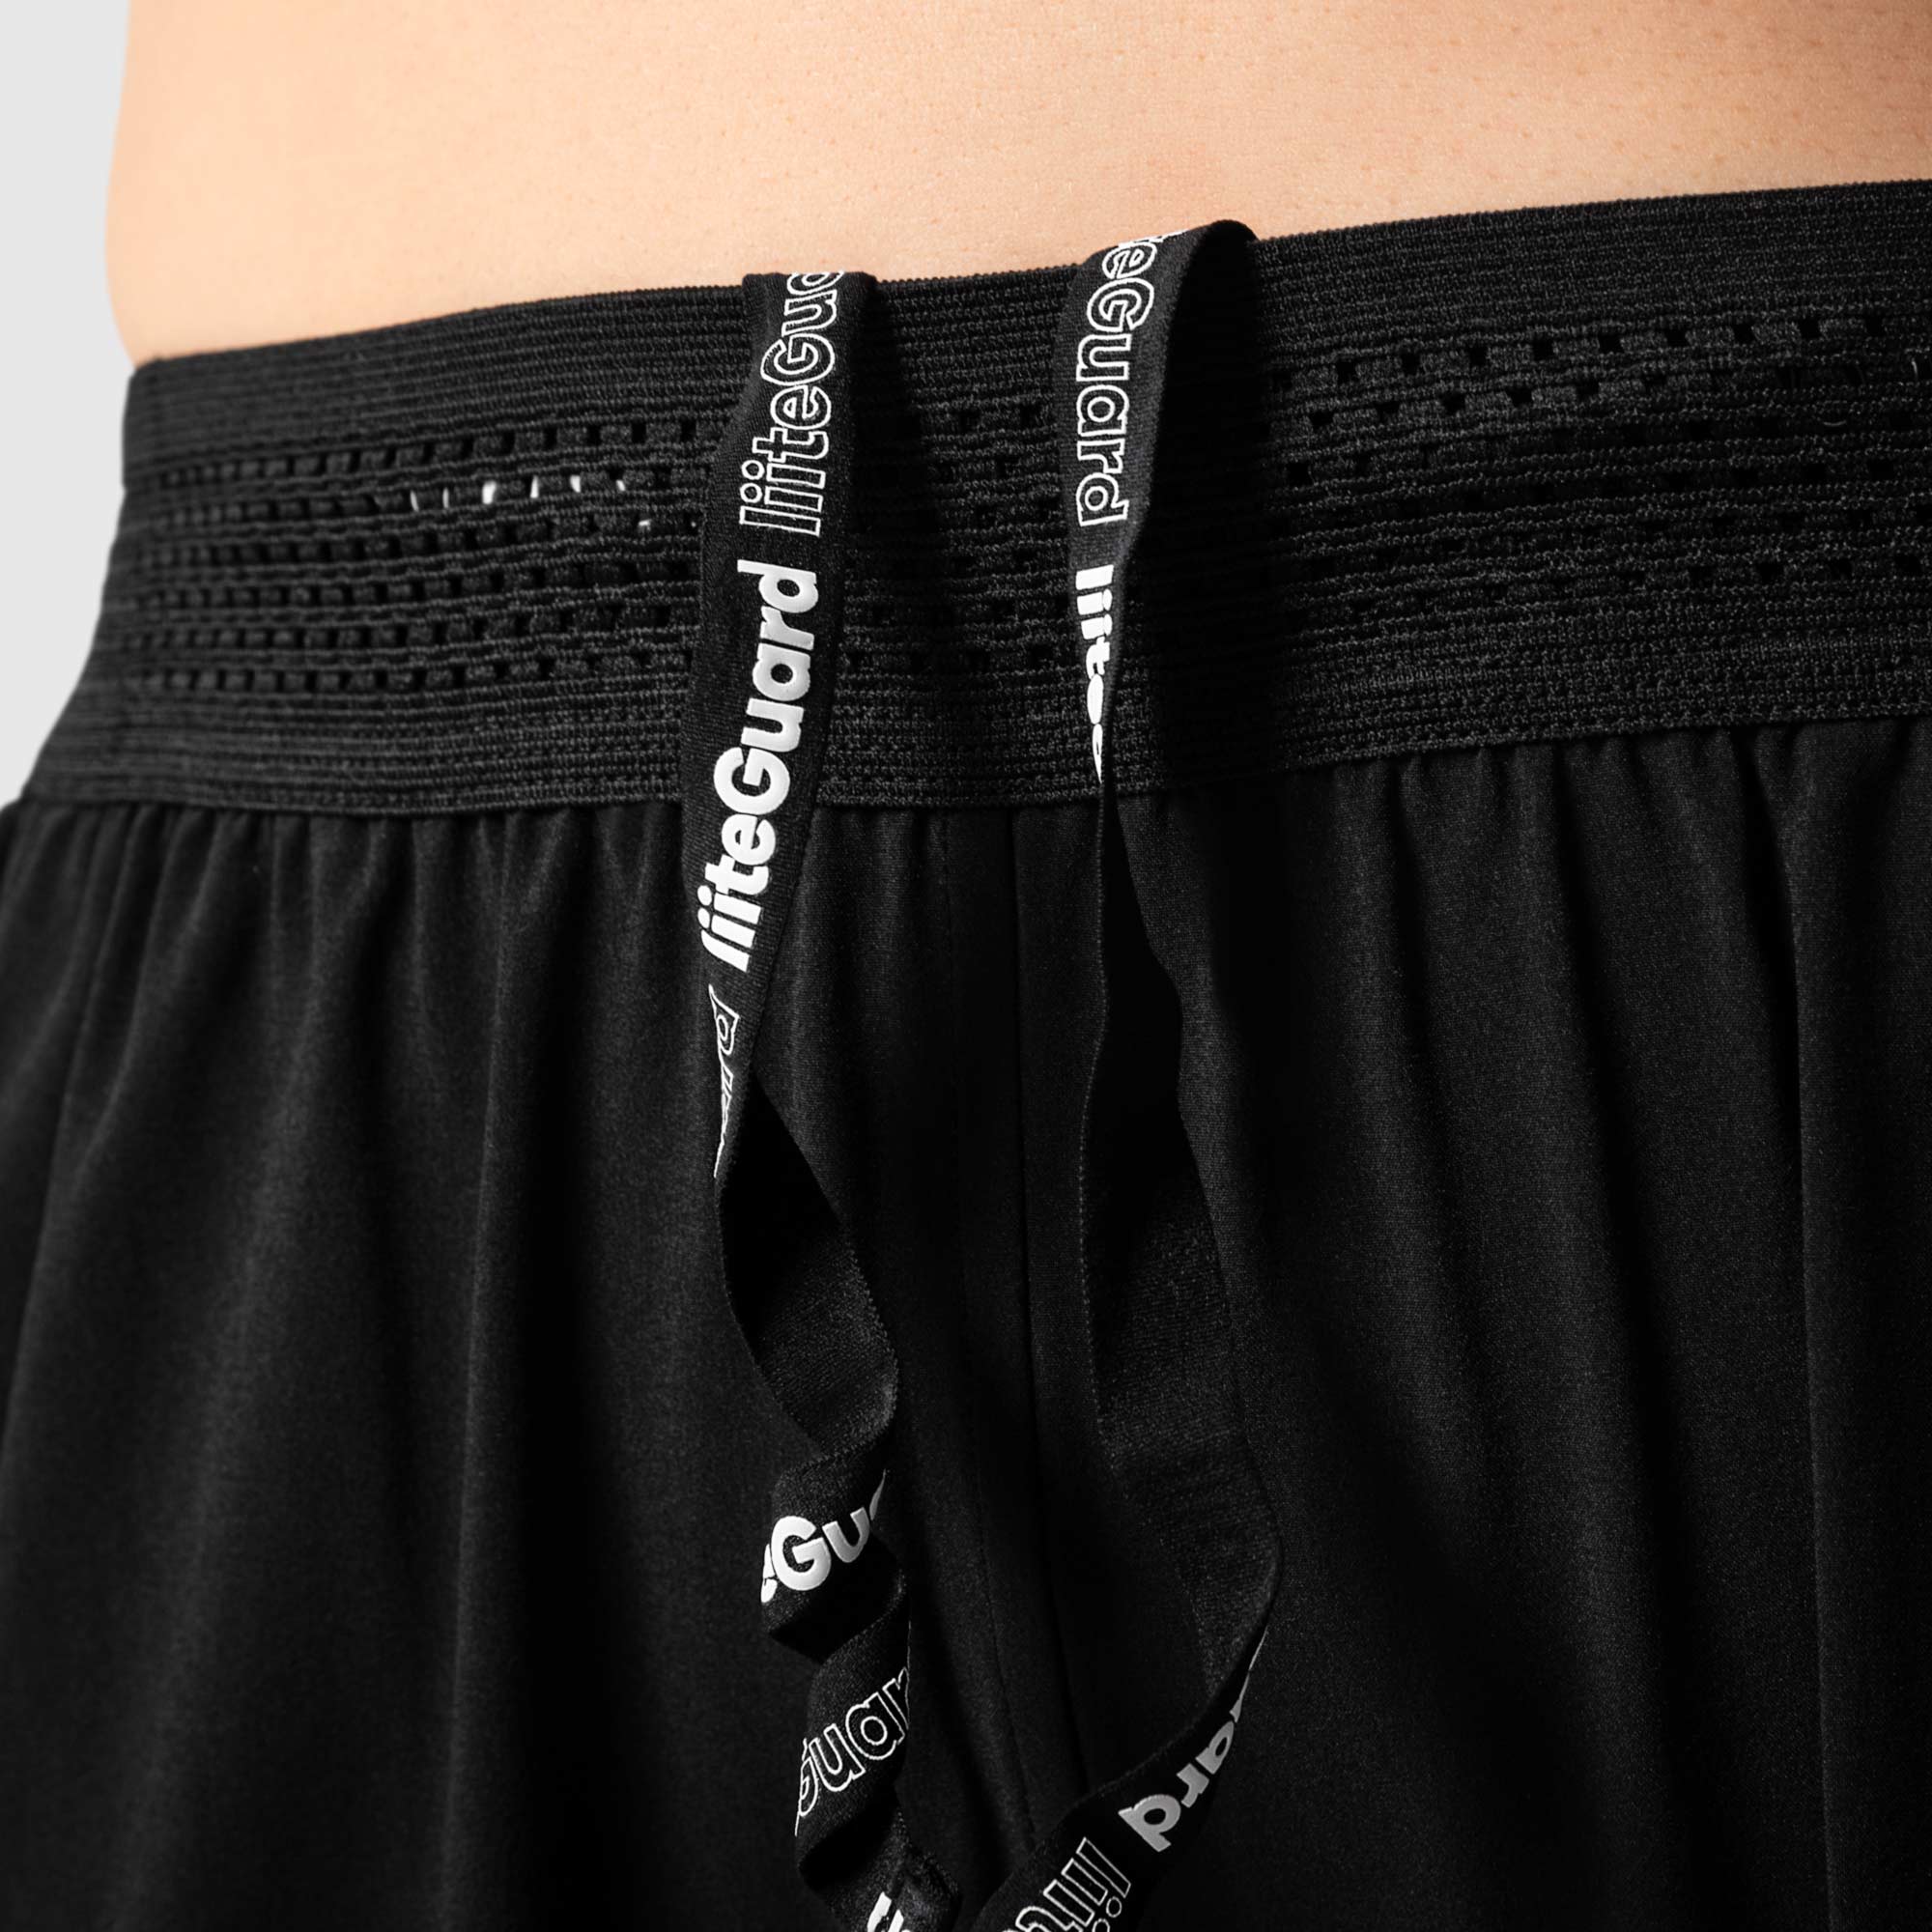 Liiteguard RE-LIITE LONG PANTS (WOMEN) Trousers BLACK